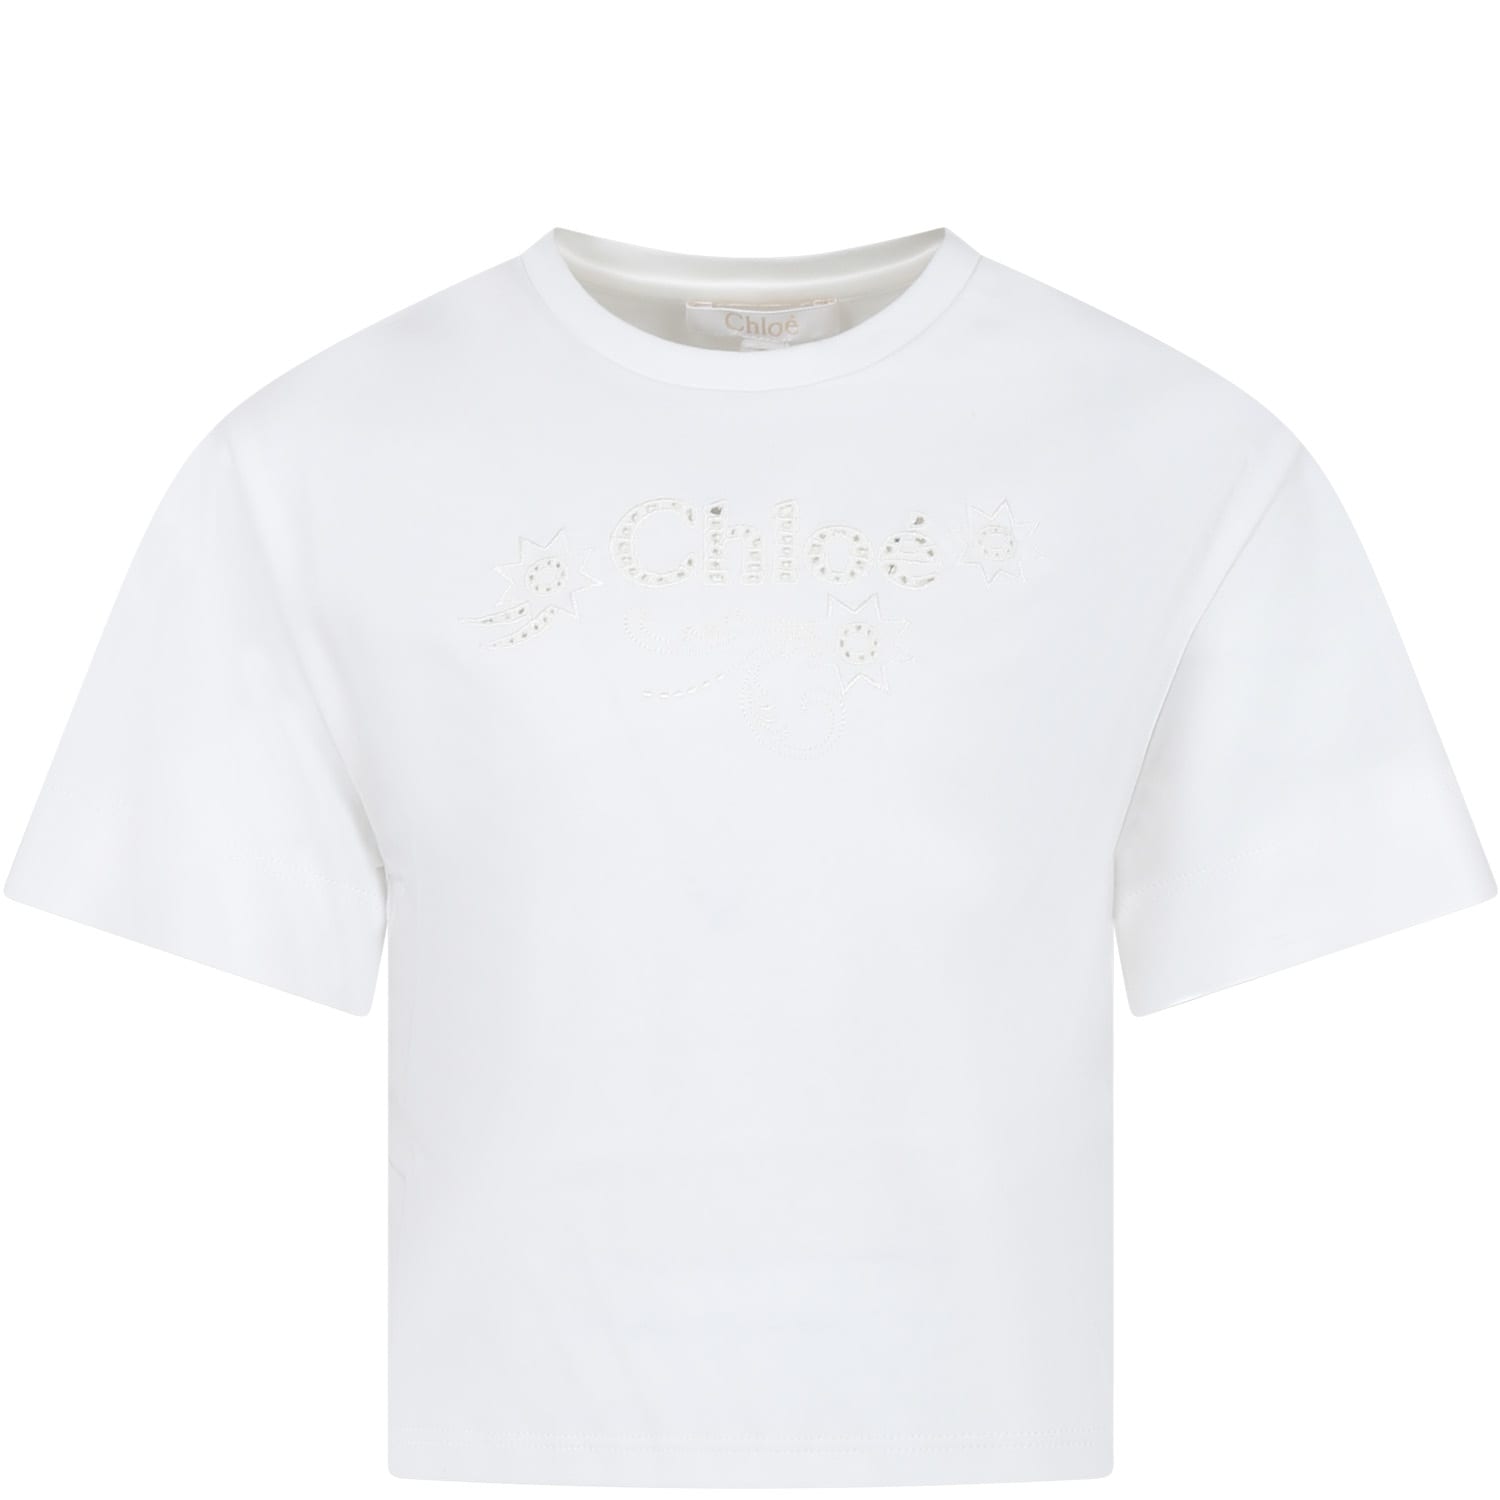 Chloé Kids' White T-shirt For Girl With Logo